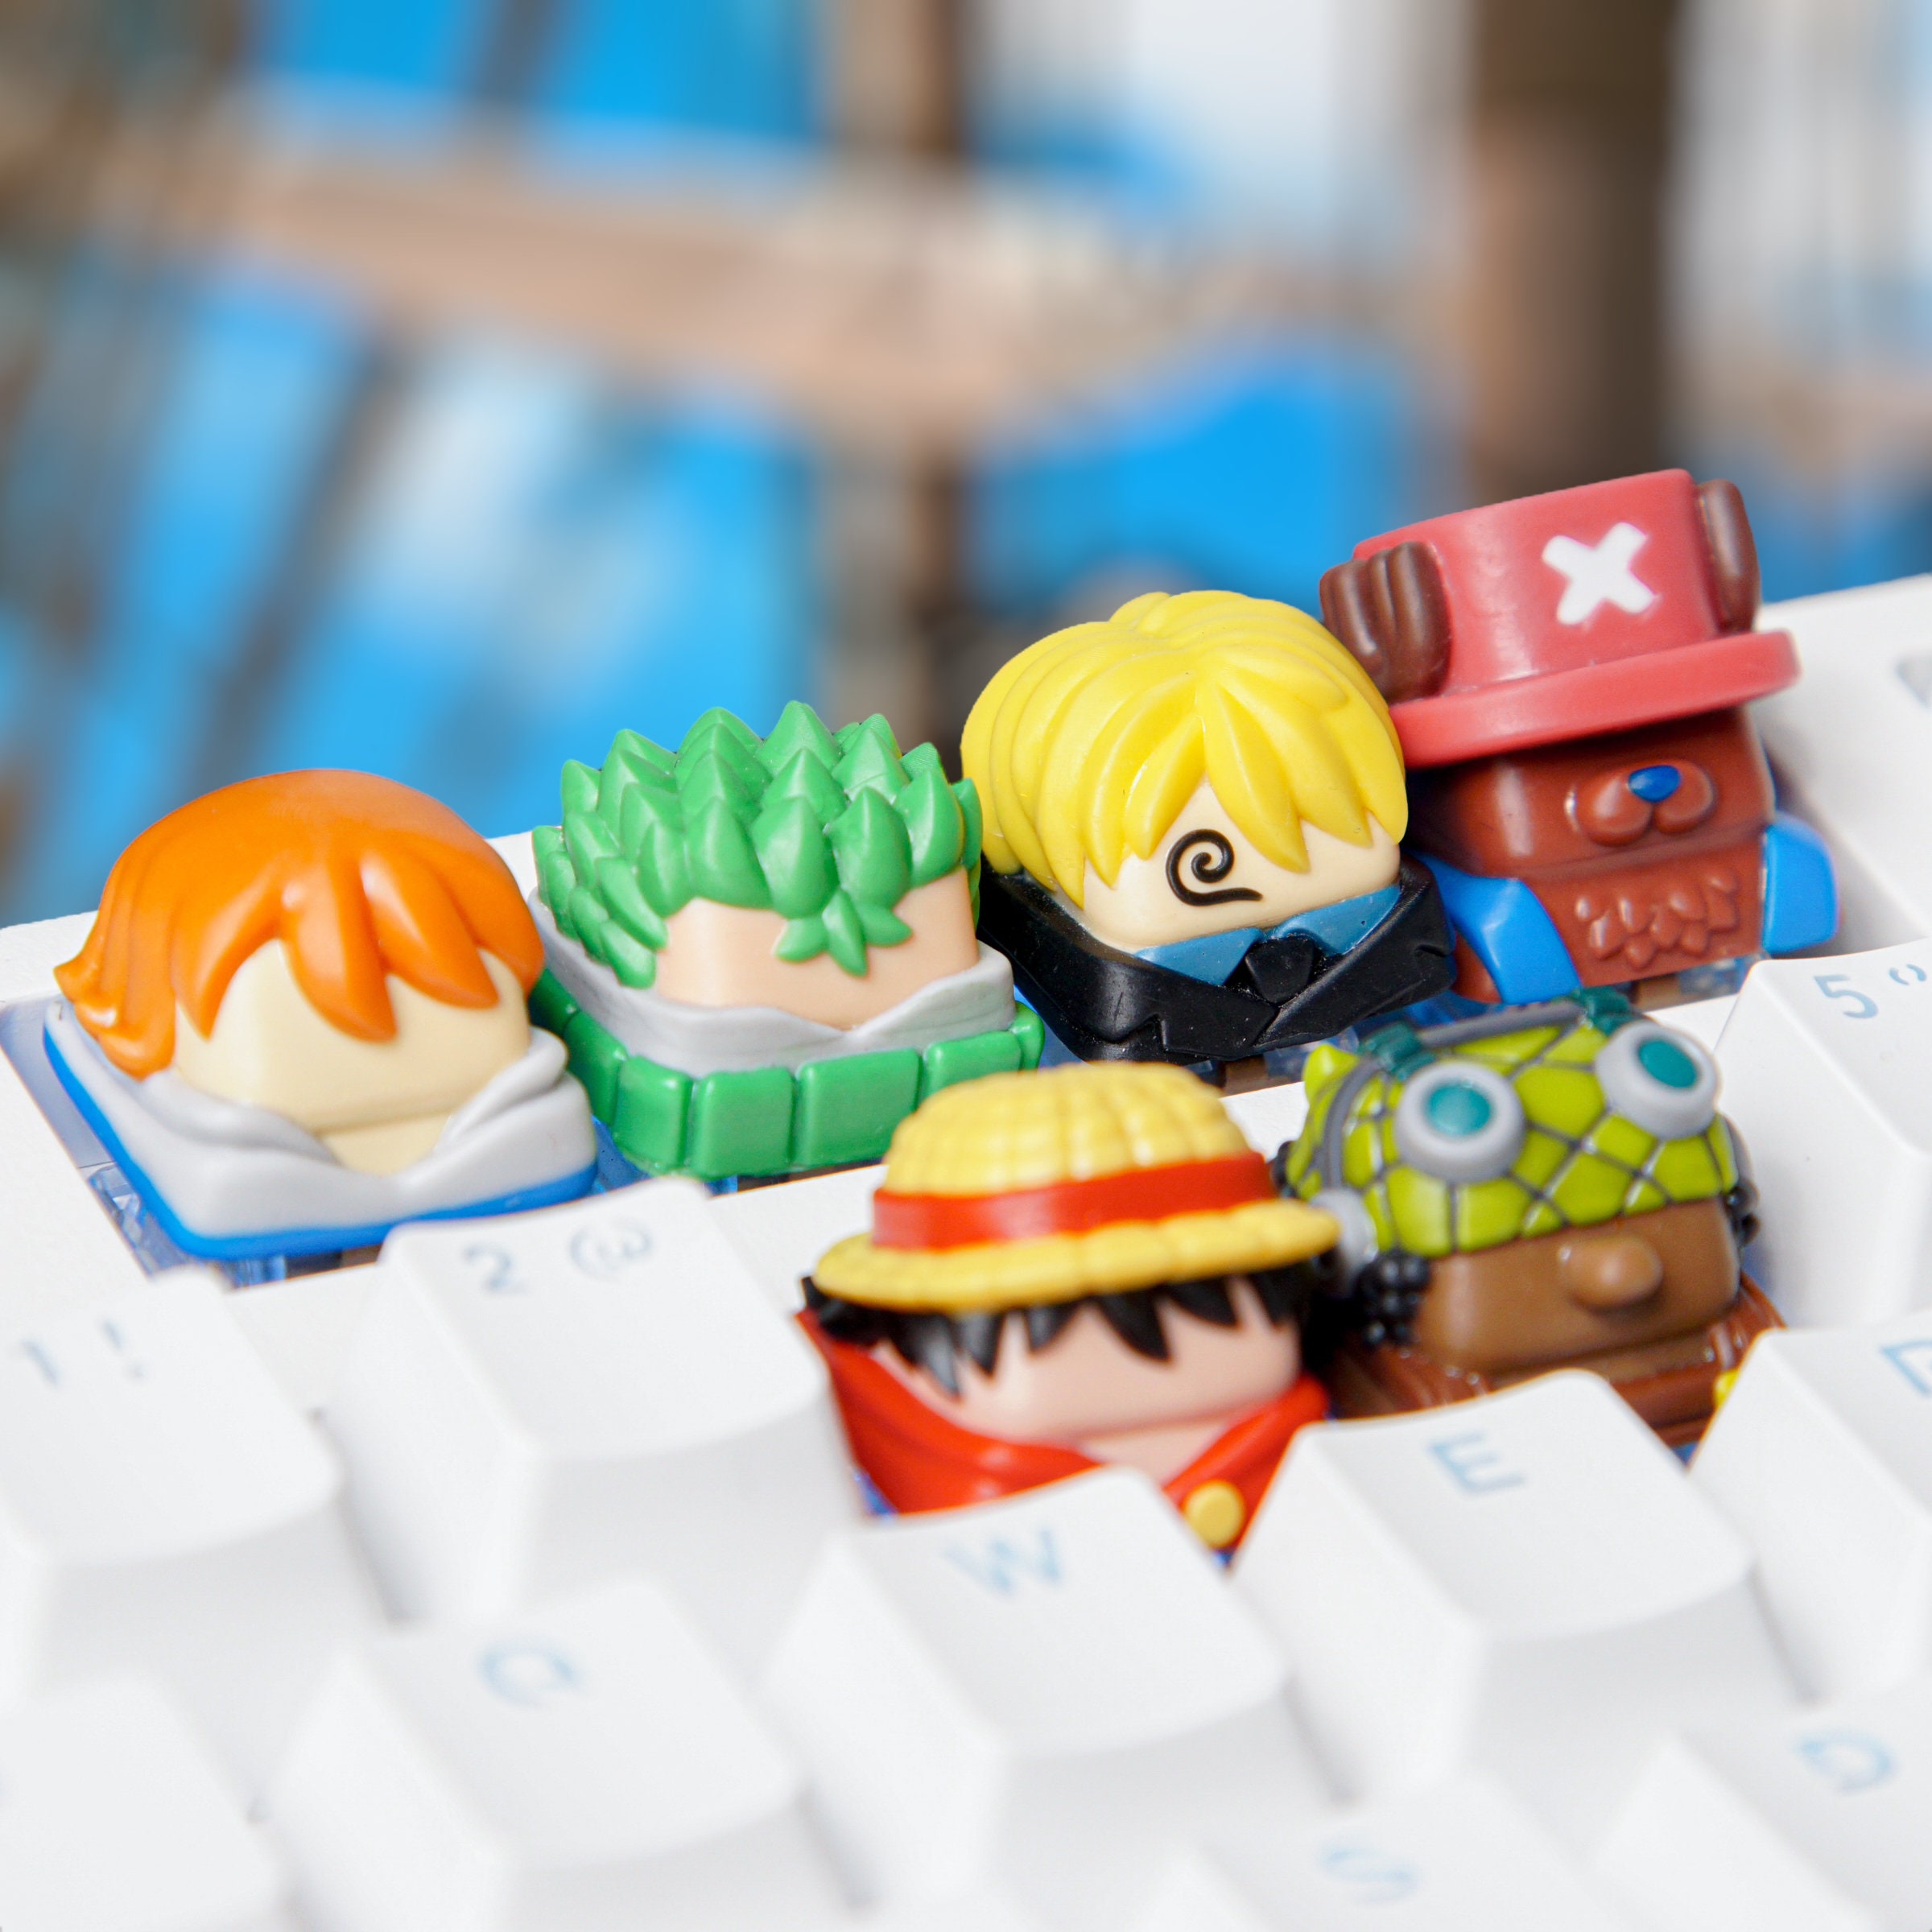 S-traw.Hat Pi.rates Keycap, One-Pie.ce Keycap, Anime Keycap, Keycap for MX Cherry Switches Mechanical Keyboard, Handmade Anime Gift